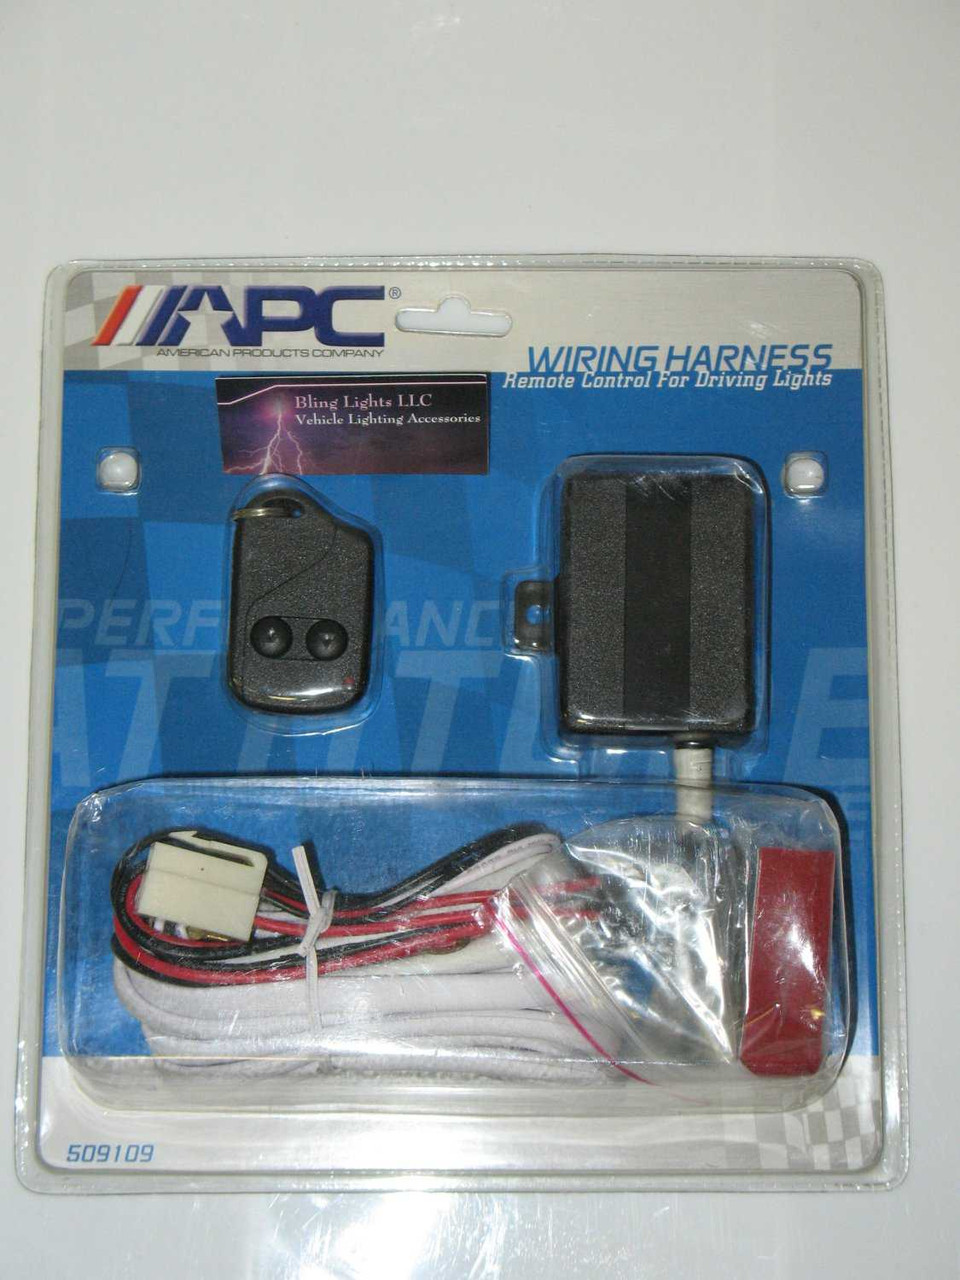 Remote Fog Lights for 2000-2004 Ford Focus VIS Racing Body Kit